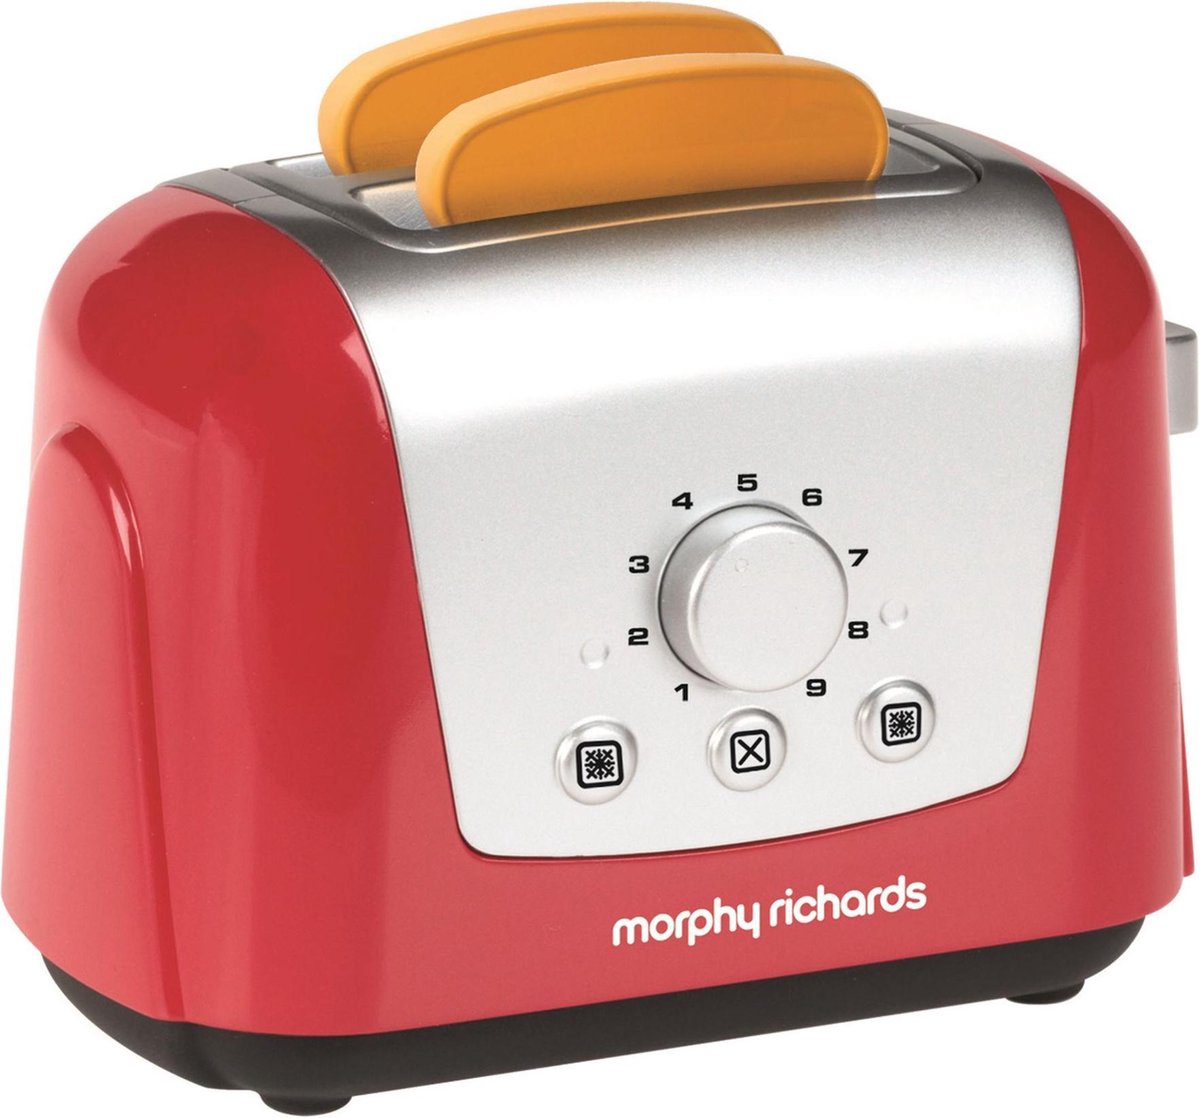 Casdon Morphy Richards Toaster - Casdon